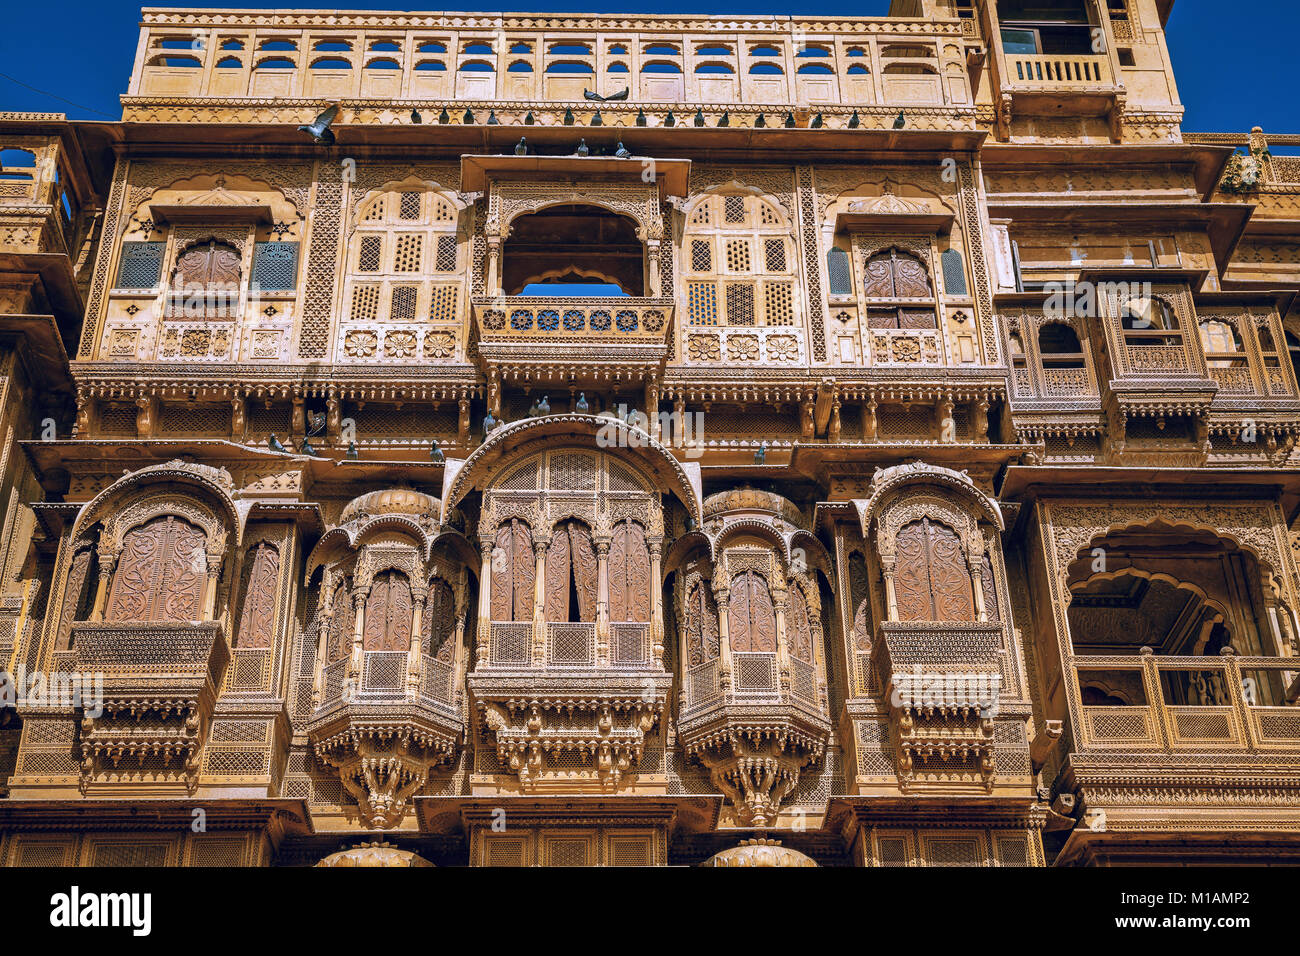 Architettura di Rajasthan artwork heritage building - Patwon Ki Haveli. Un splendidi royal palazzo residenziale edificio a Jaisalmer, Rajasthan. Foto Stock